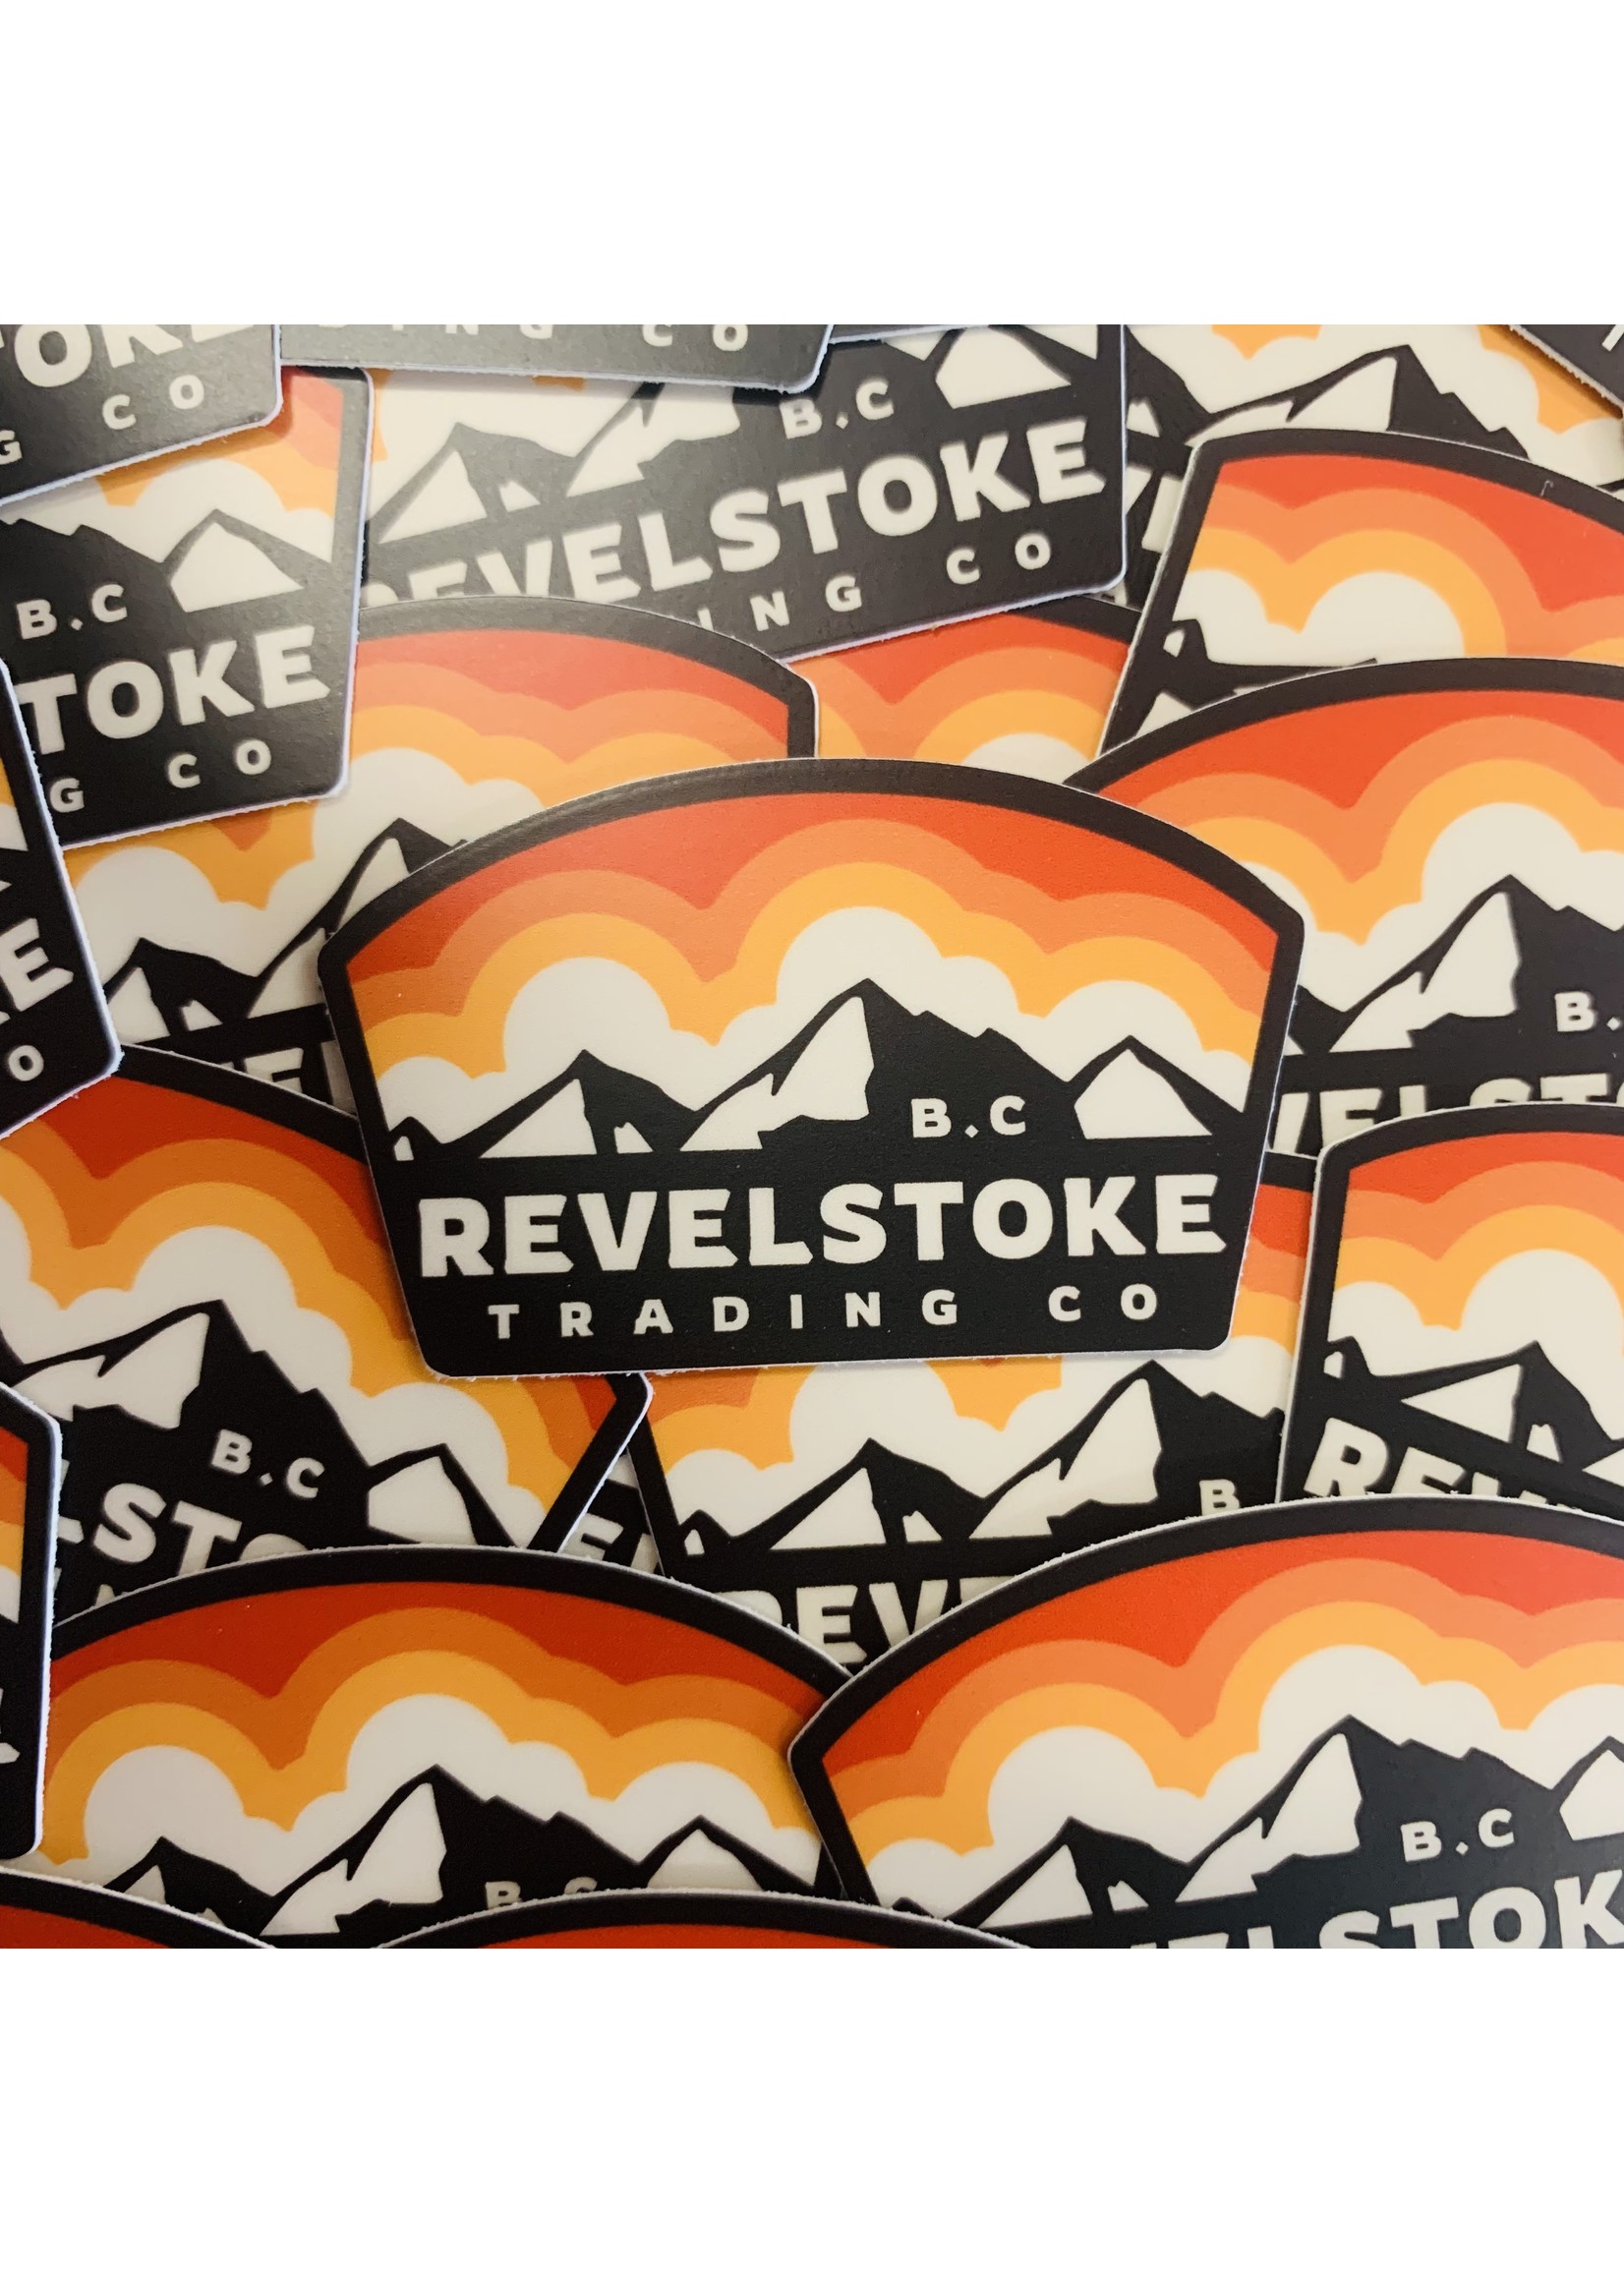 Trading Co. Revelstoke - TradingCo Sticker